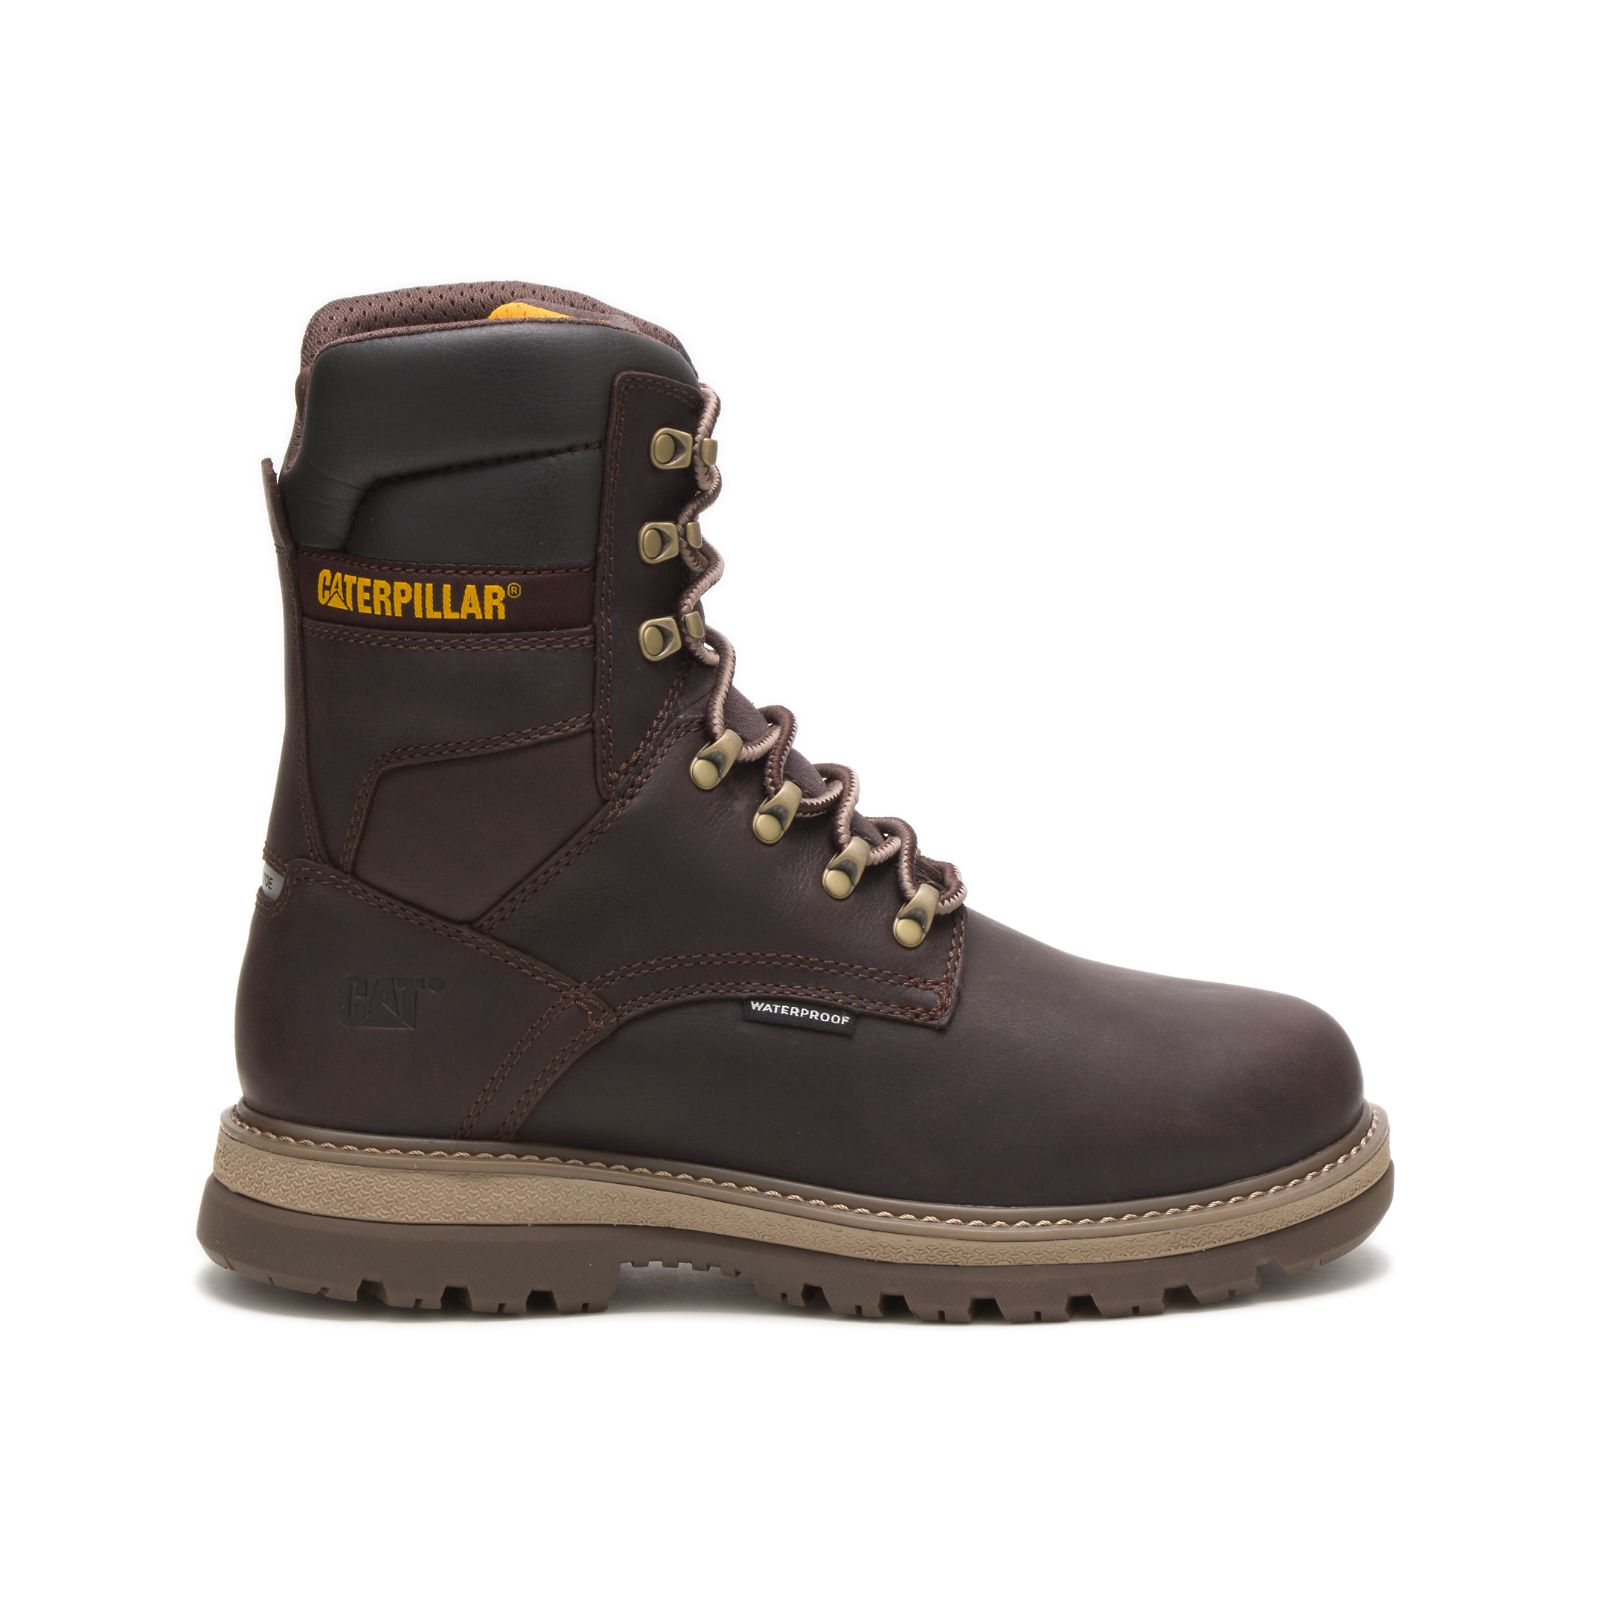 Caterpillar Boots PK - Caterpillar Fairbanks 8" Waterproof Tx Steel Toe Mens Work Boots Brown (071264-QYJ)